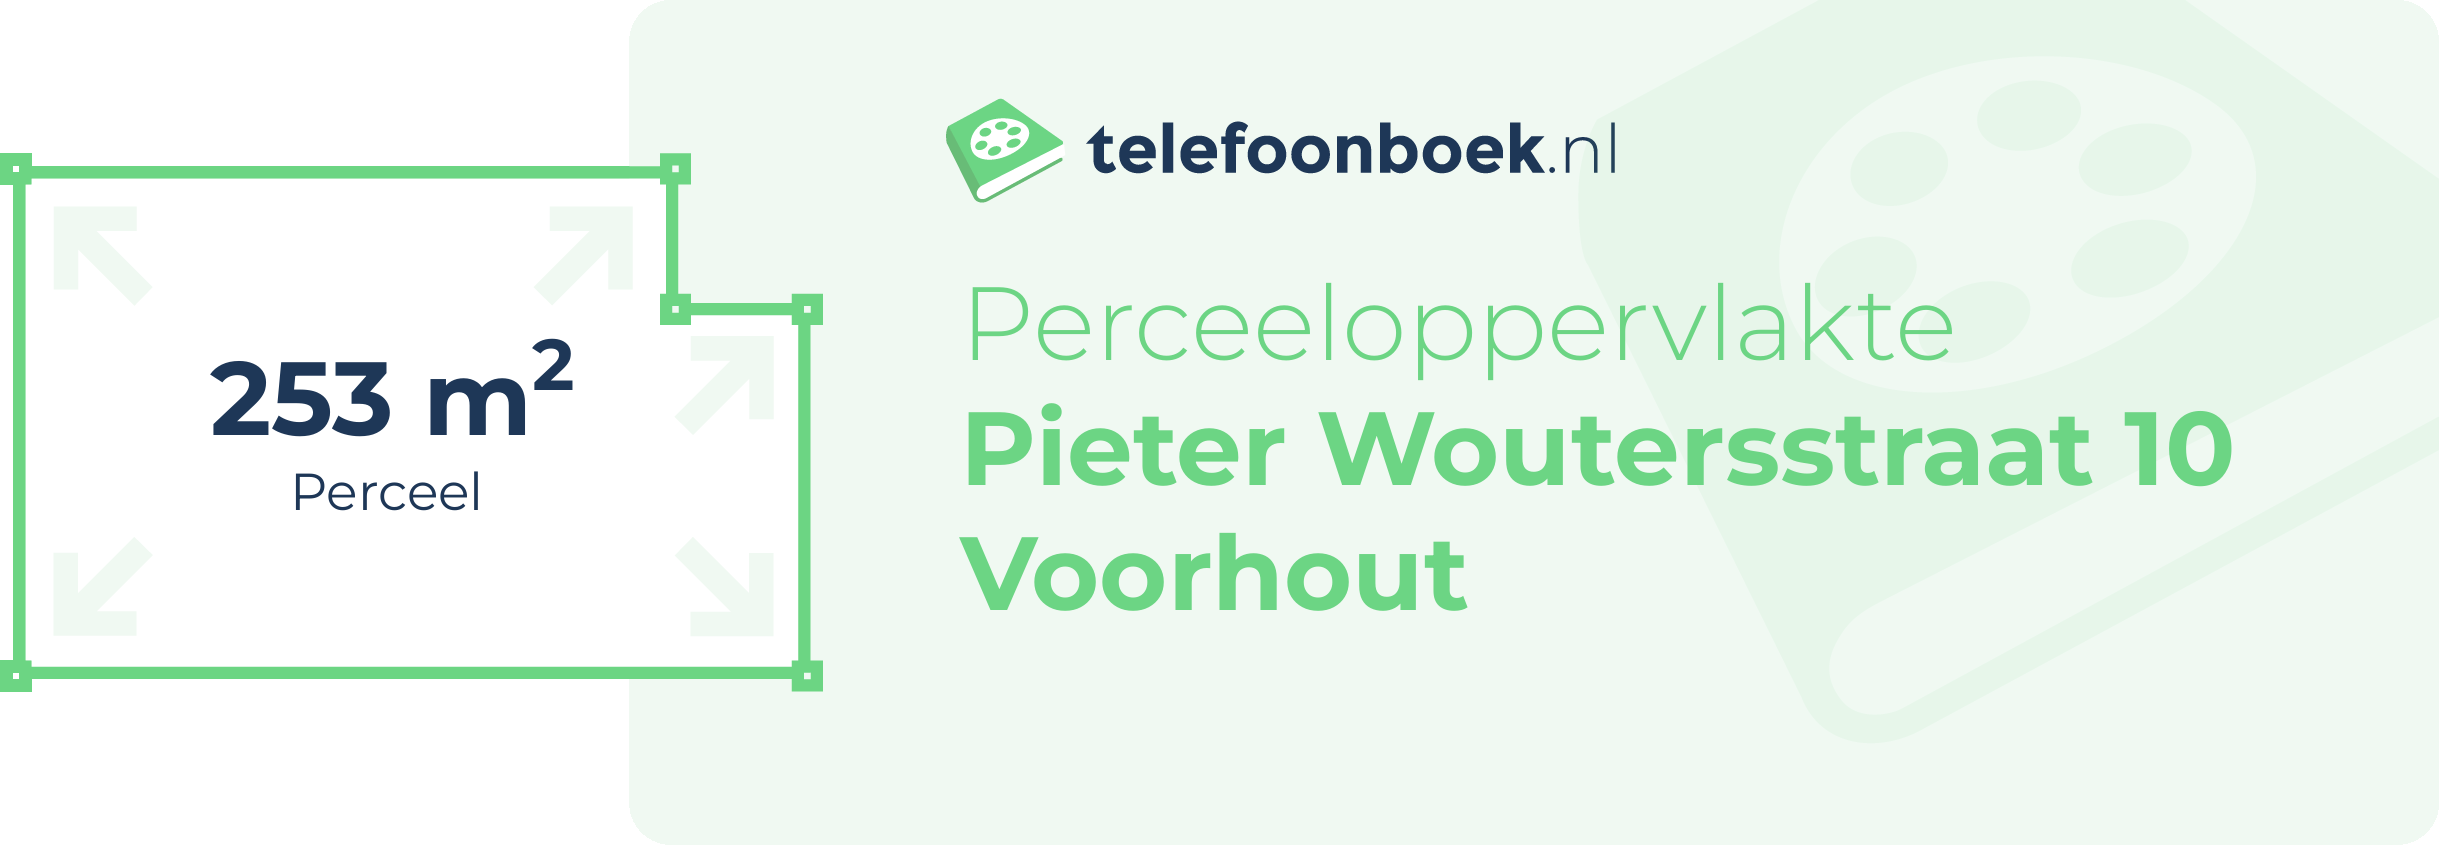 Perceeloppervlakte Pieter Woutersstraat 10 Voorhout